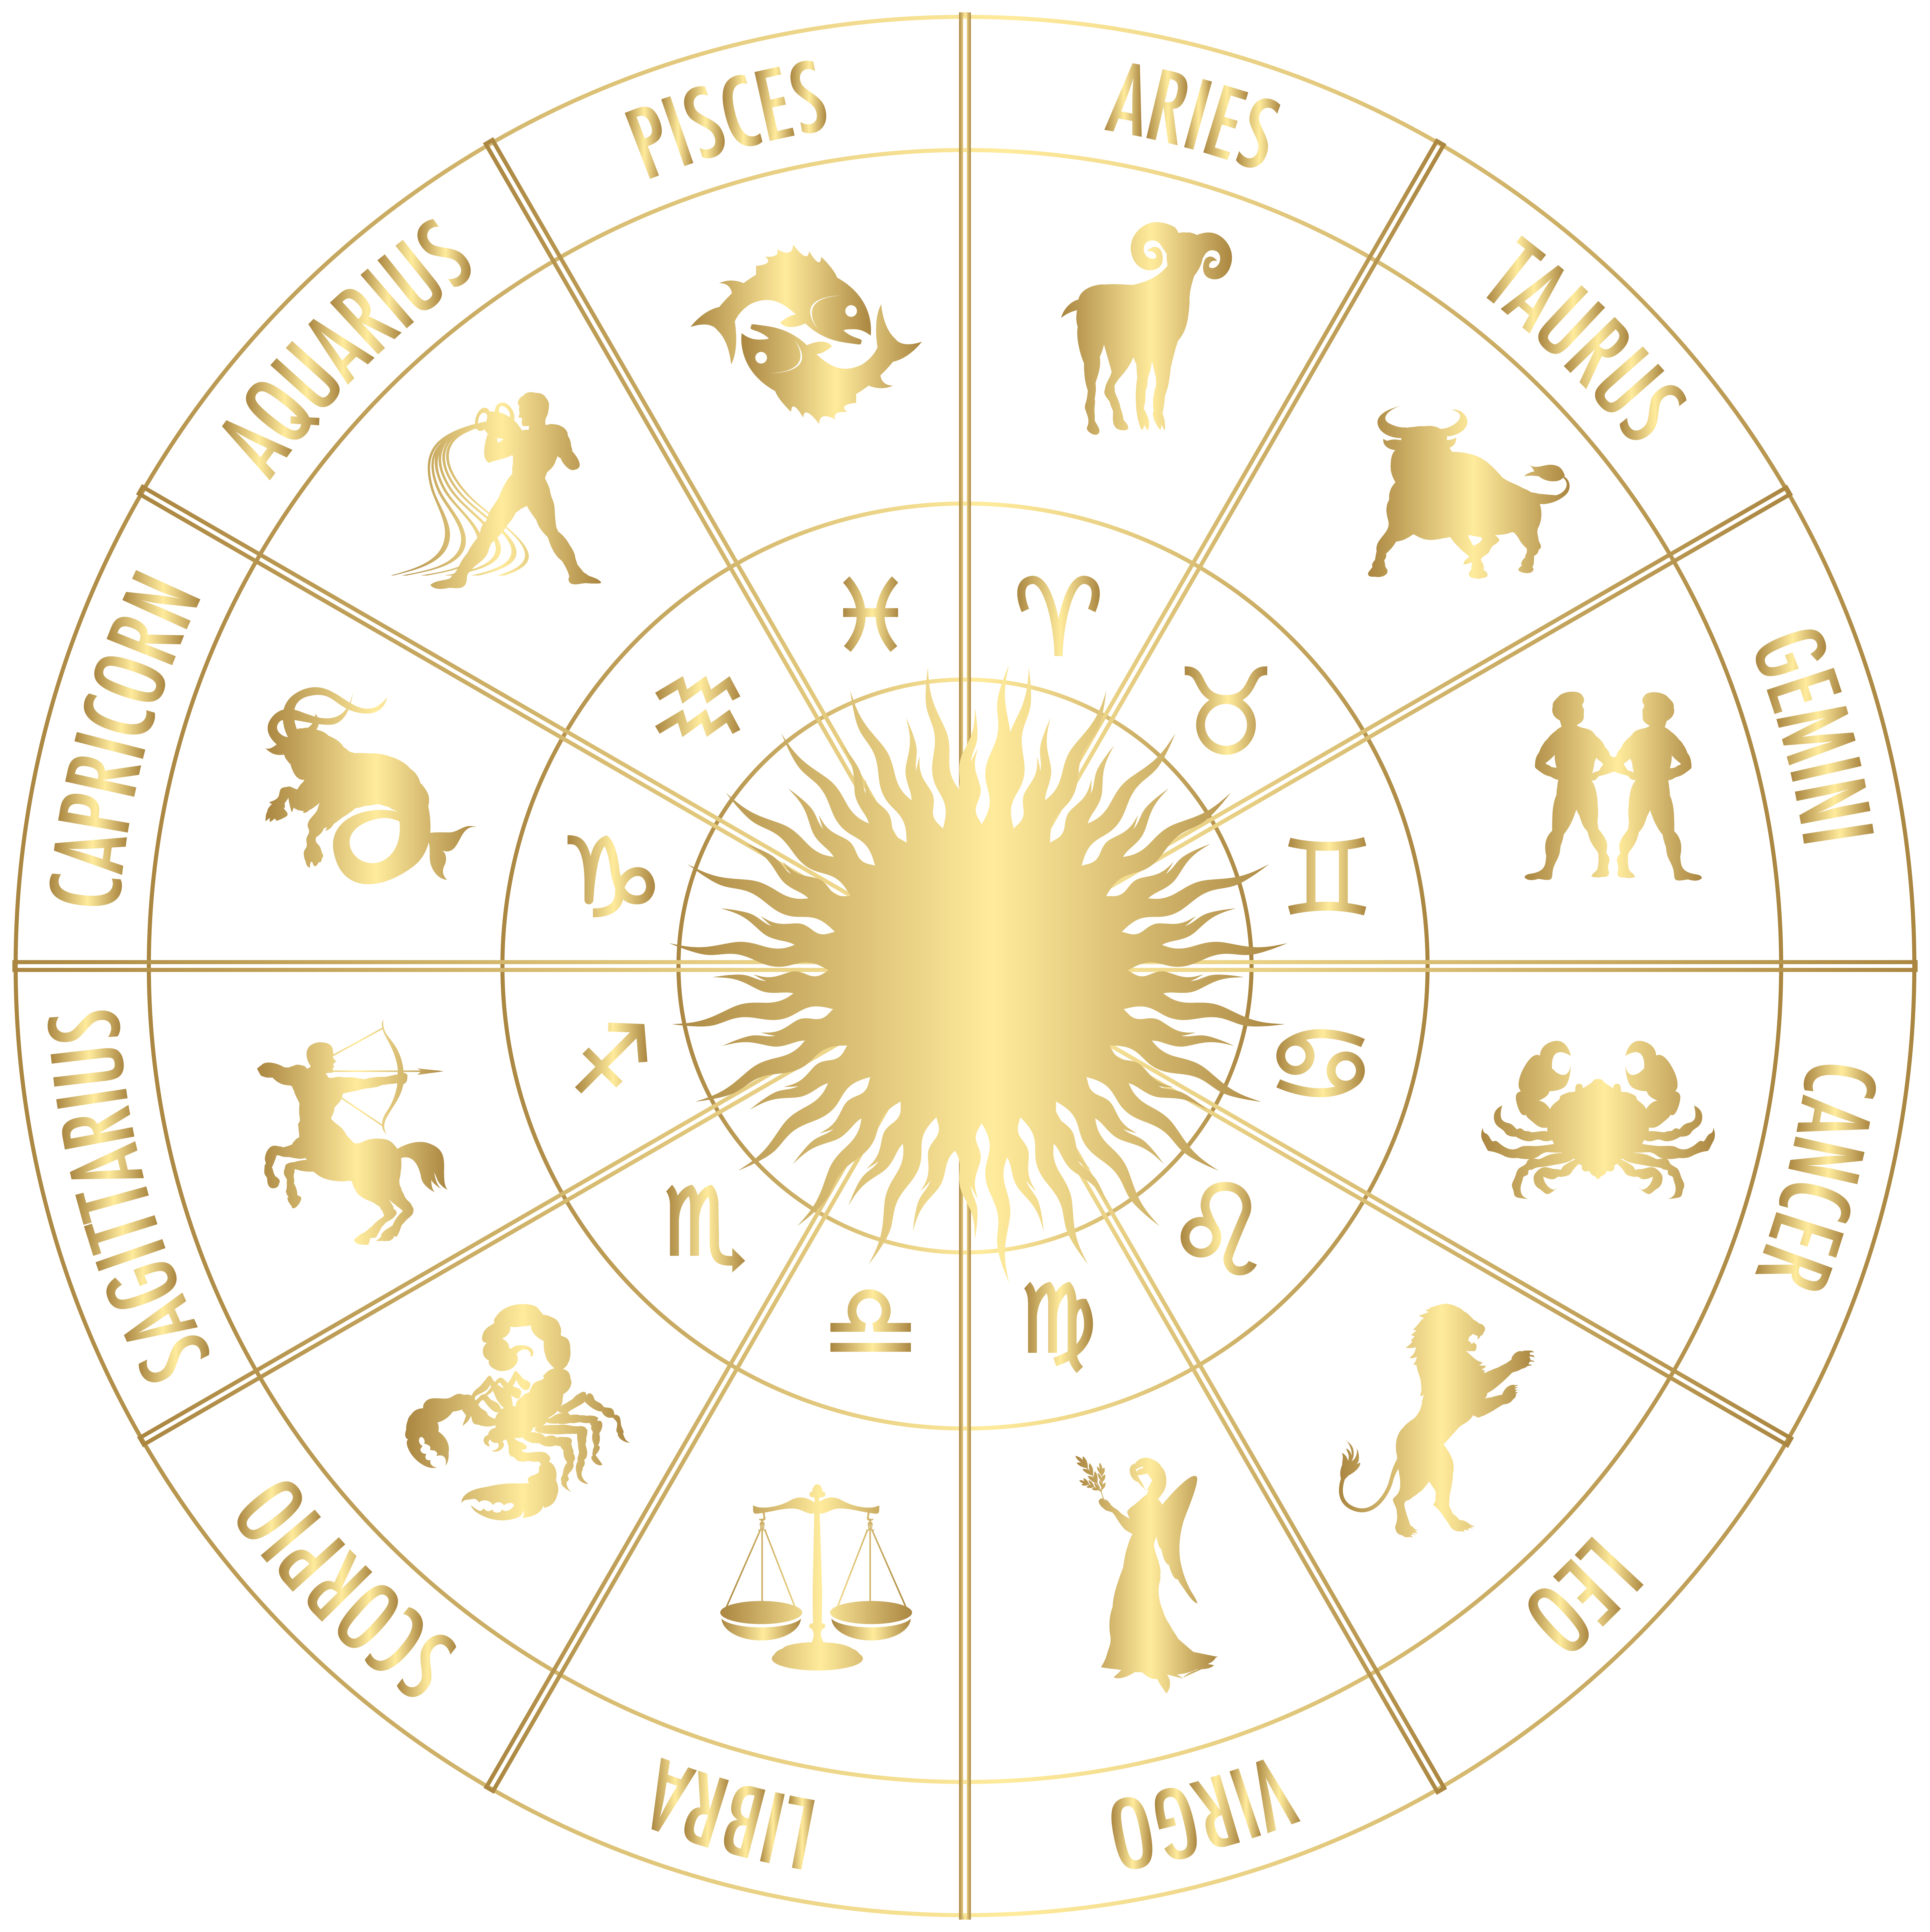 Astrology Classes